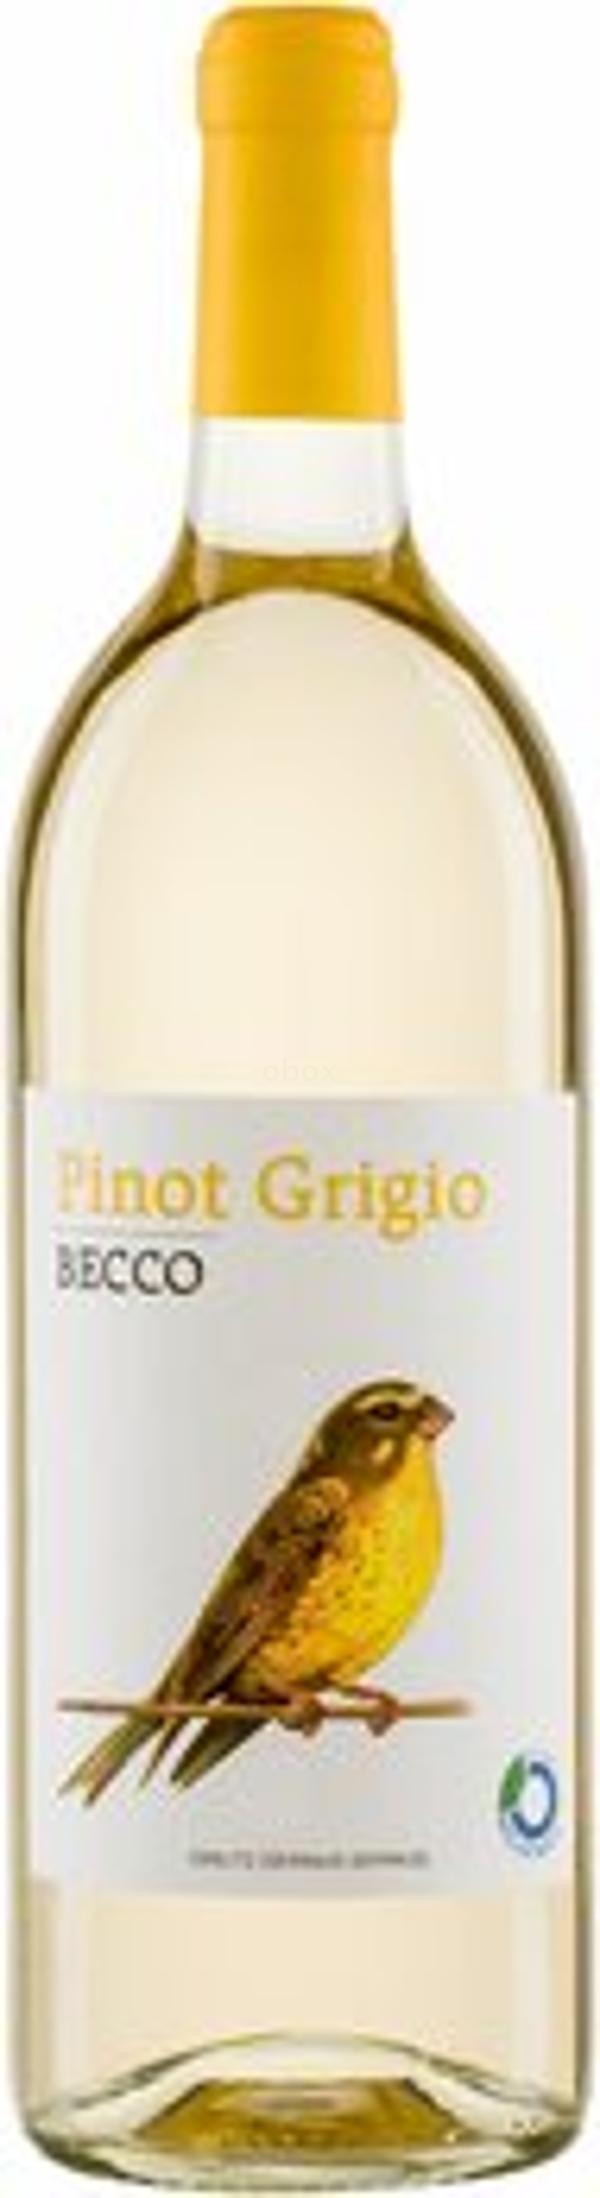 Produktfoto zu Pinot Grigio Becco weiß